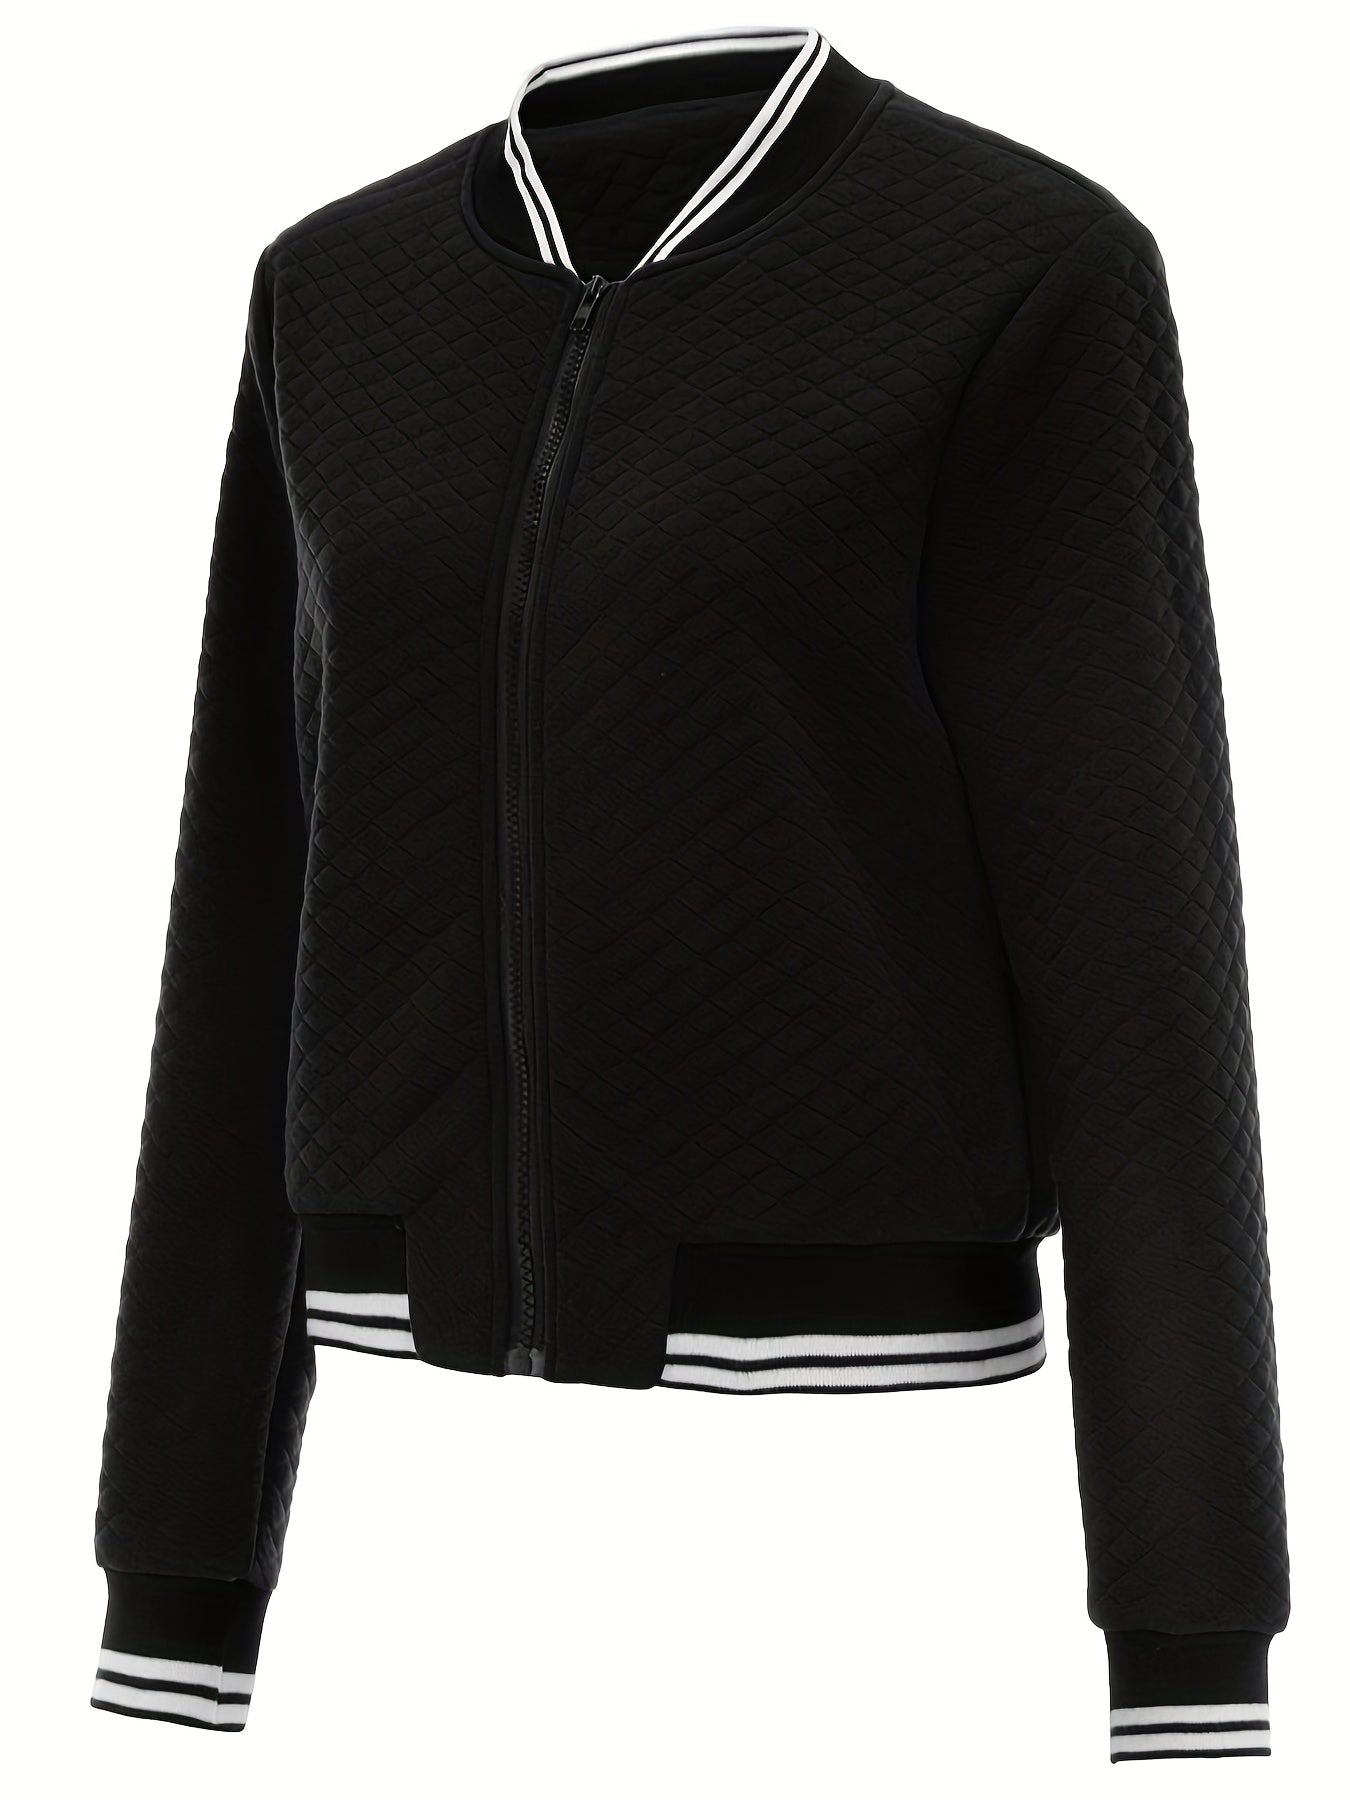 Girlfairy Contrast Trim Zipper Bomber Jacket, Casual Long Sleeve Varsity Jacket For Spring & Fall, Women's Clothing